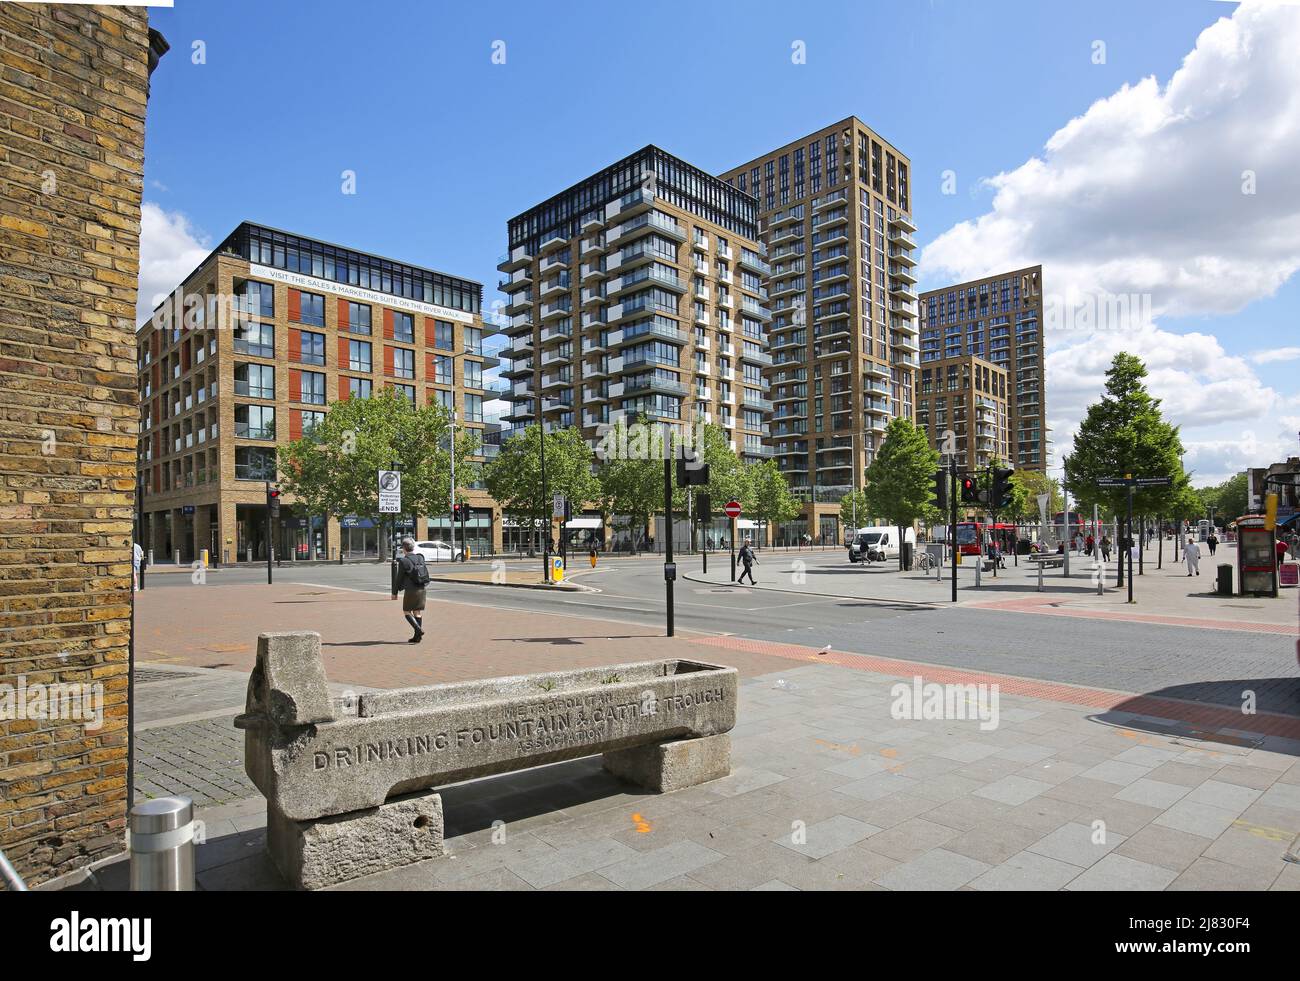 New residential development on Beresford Street, Woolwich, London, UK. Built around the new Elizabeth Line (Crossrail) station. Stock Photo